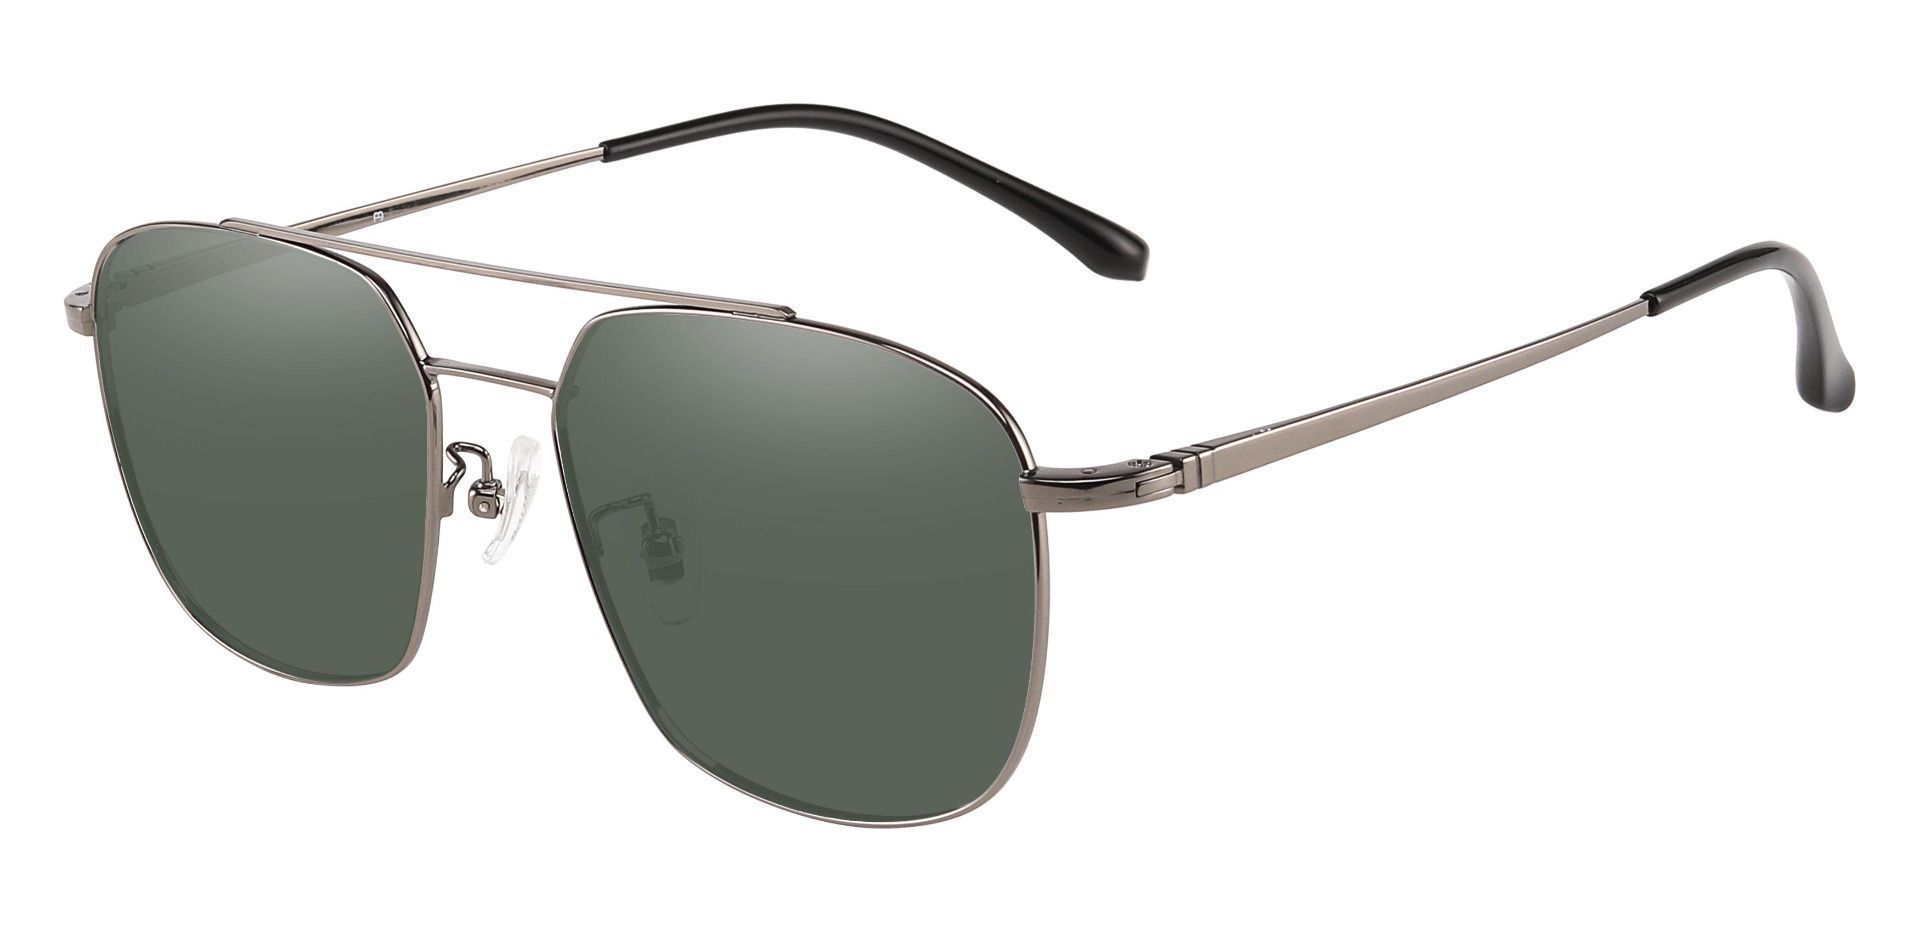 Trevor Aviator Prescription Sunglasses - Gray Frame With Green Lenses